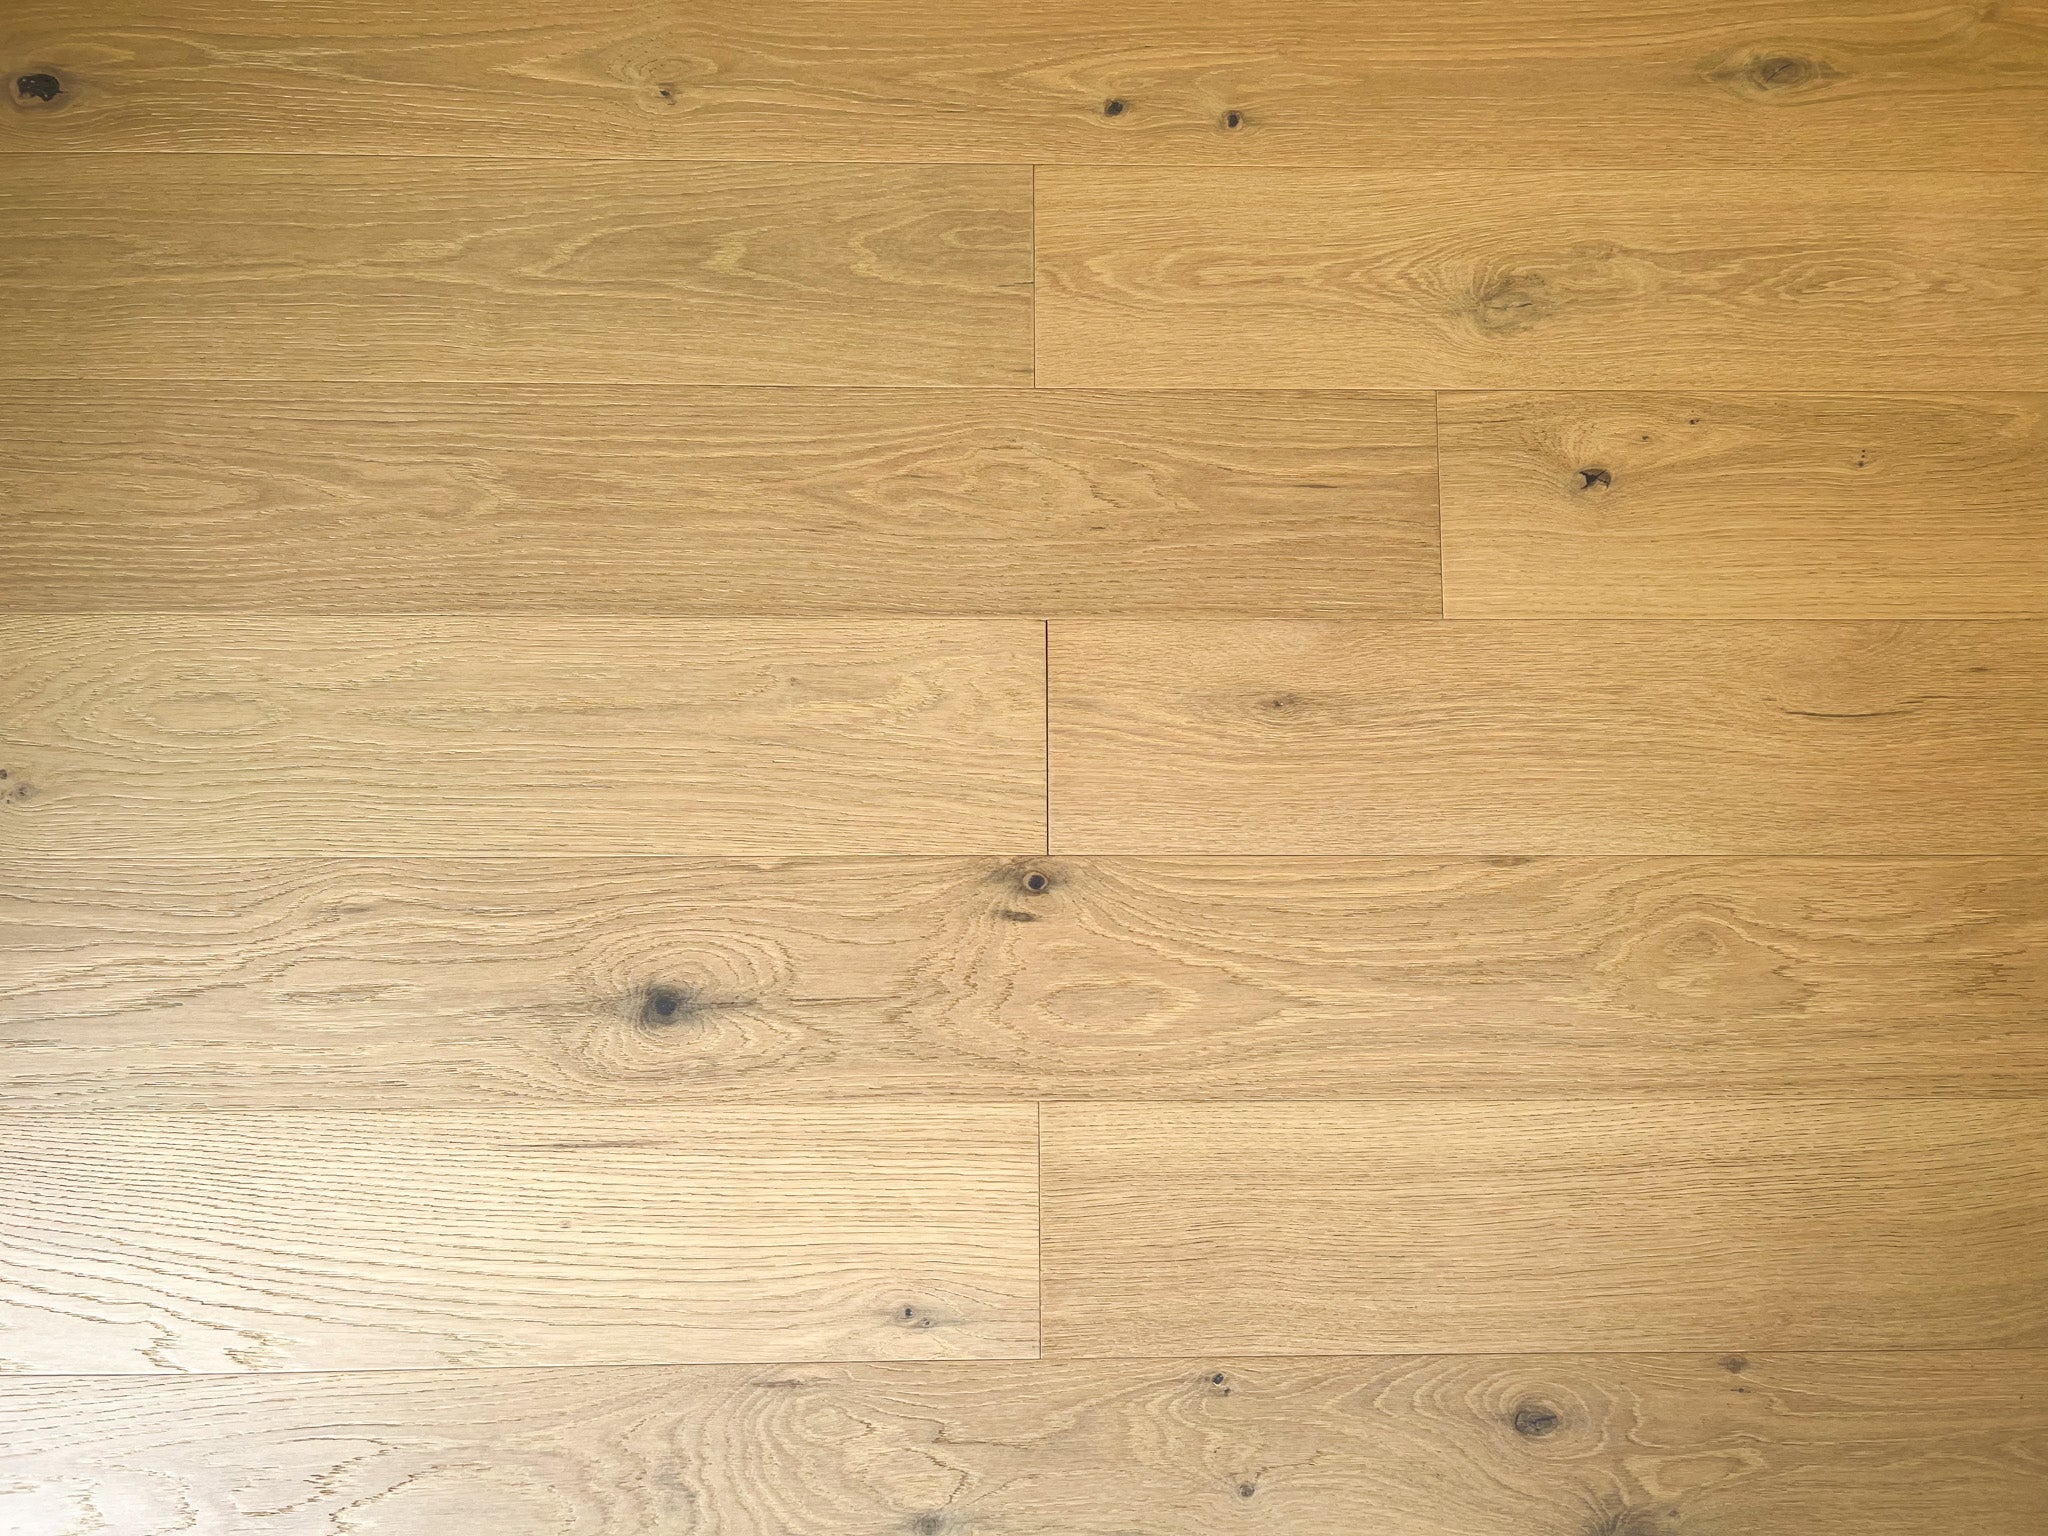 Wide Plank French Oak Flooring White